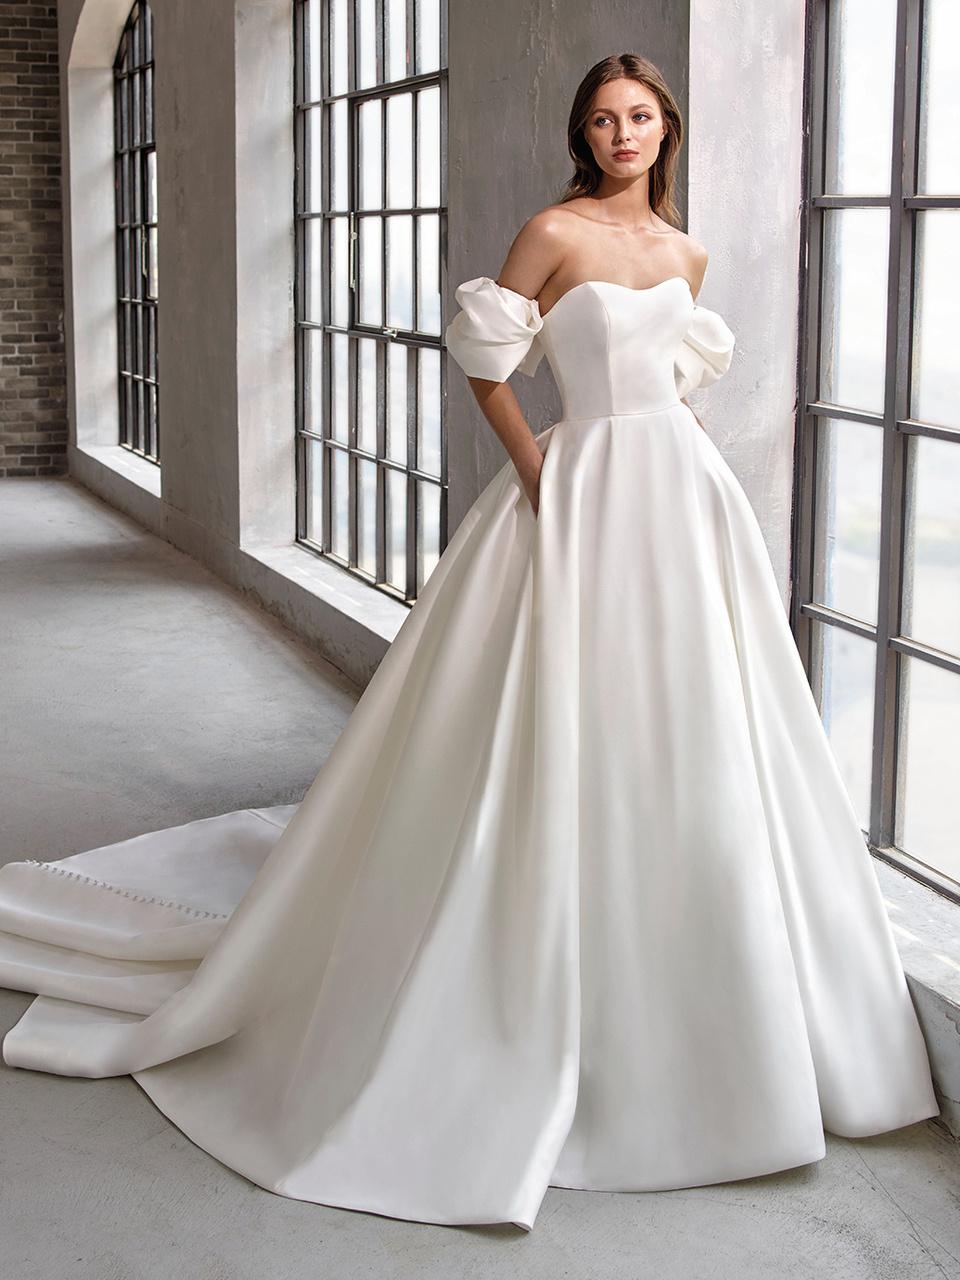 Princess Wedding Dresses: 27 Enchanting Ball Gown Wedding Dresses